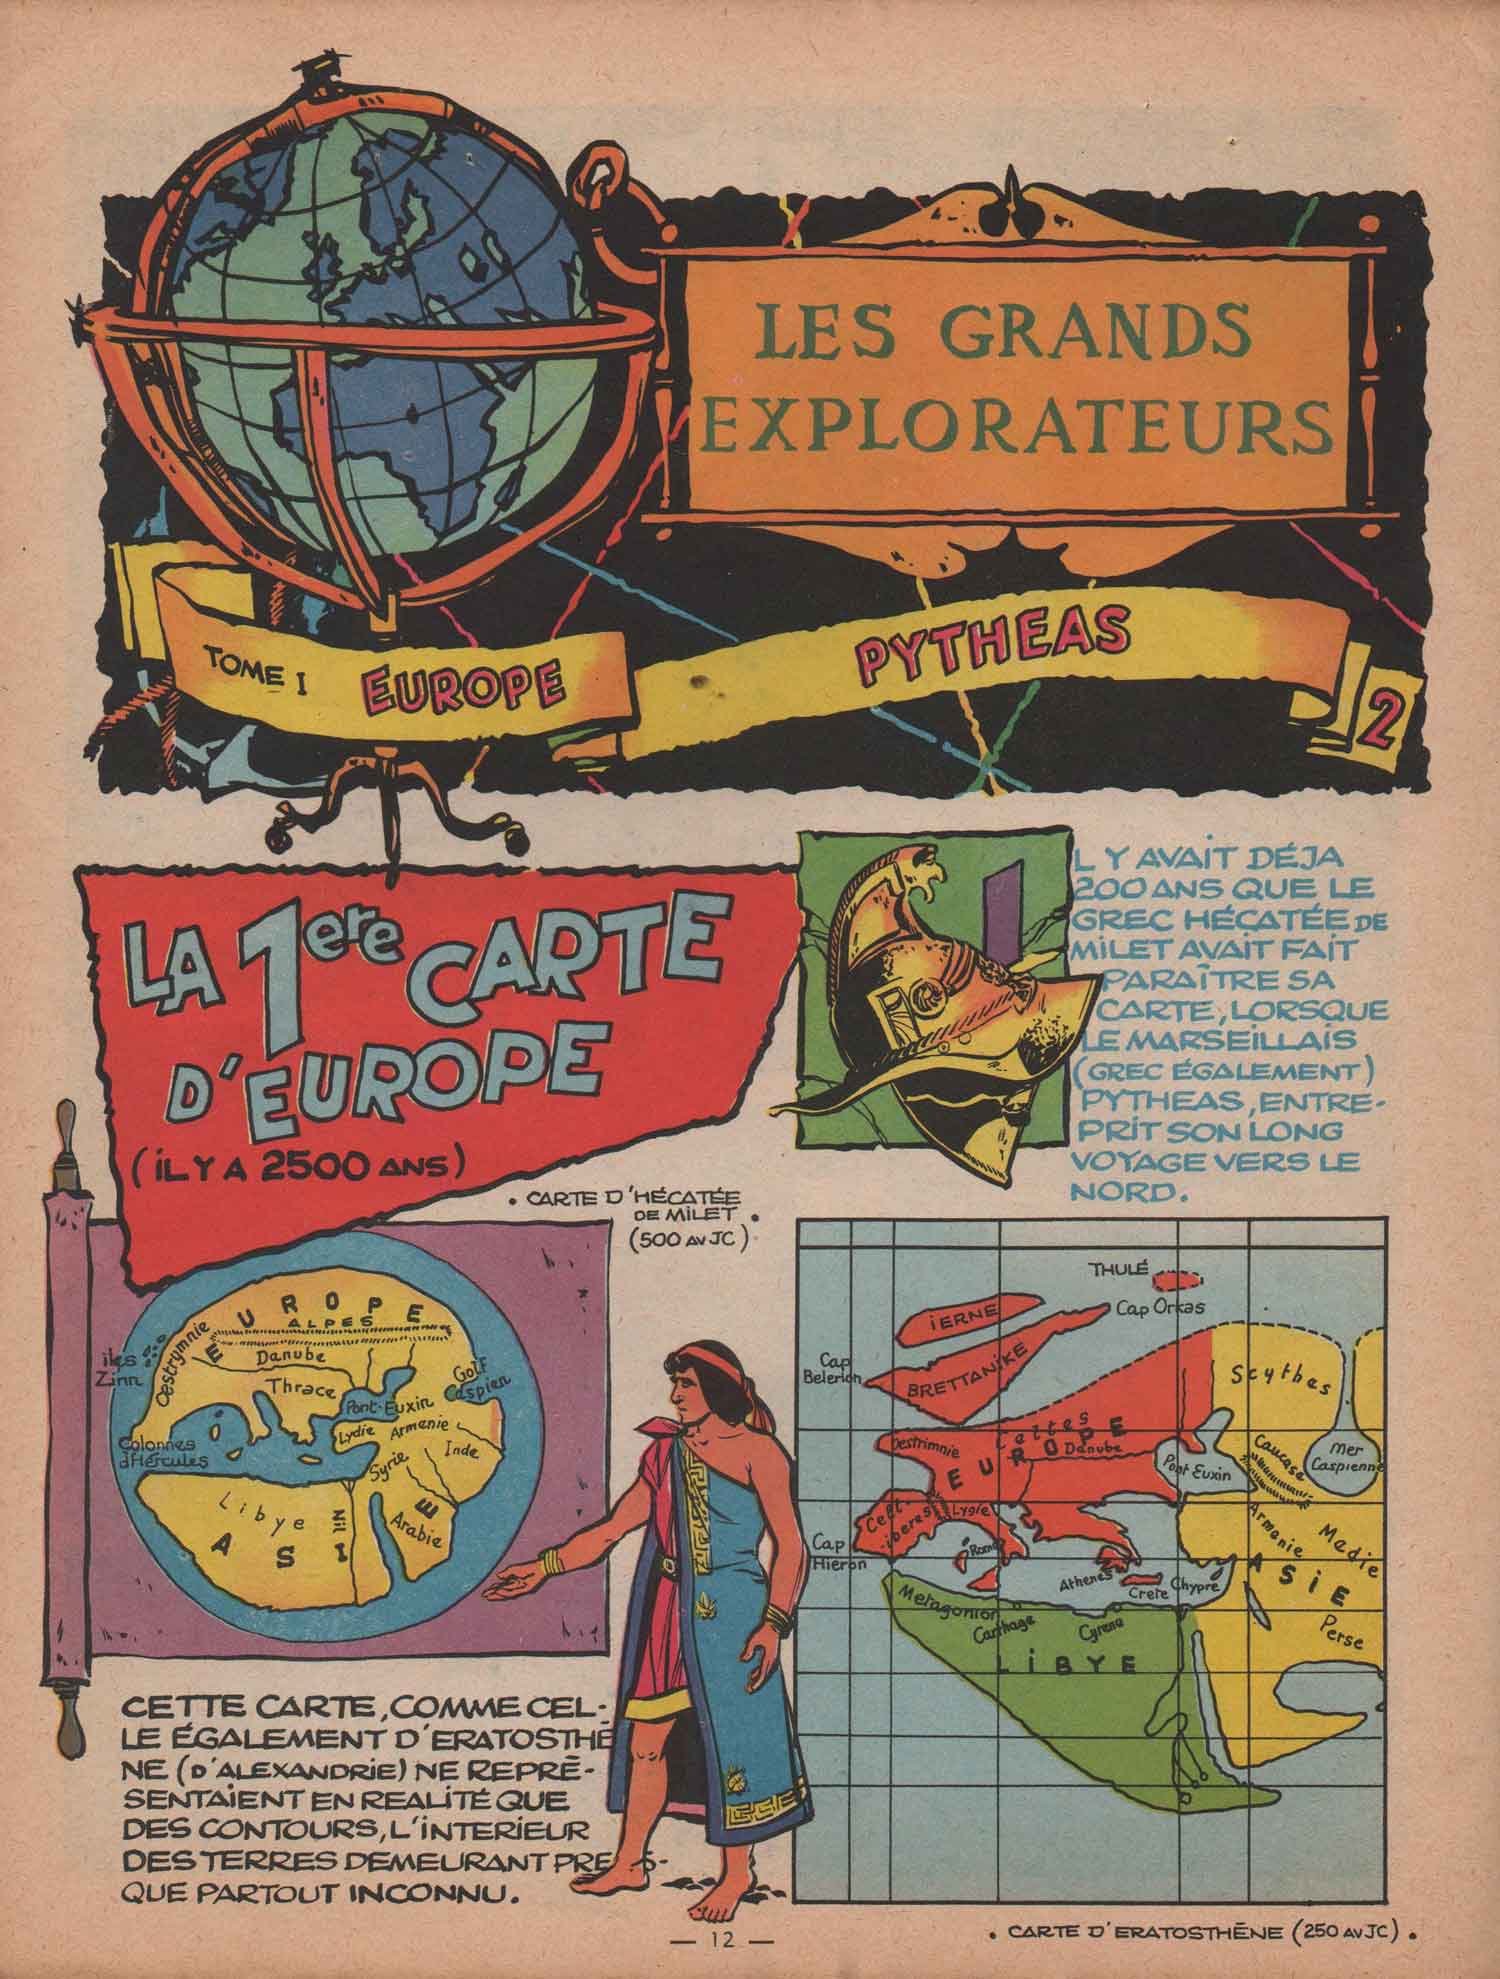 « Les Grands Explorateurs » dans Kon Tiki n° 3 (06/1959).